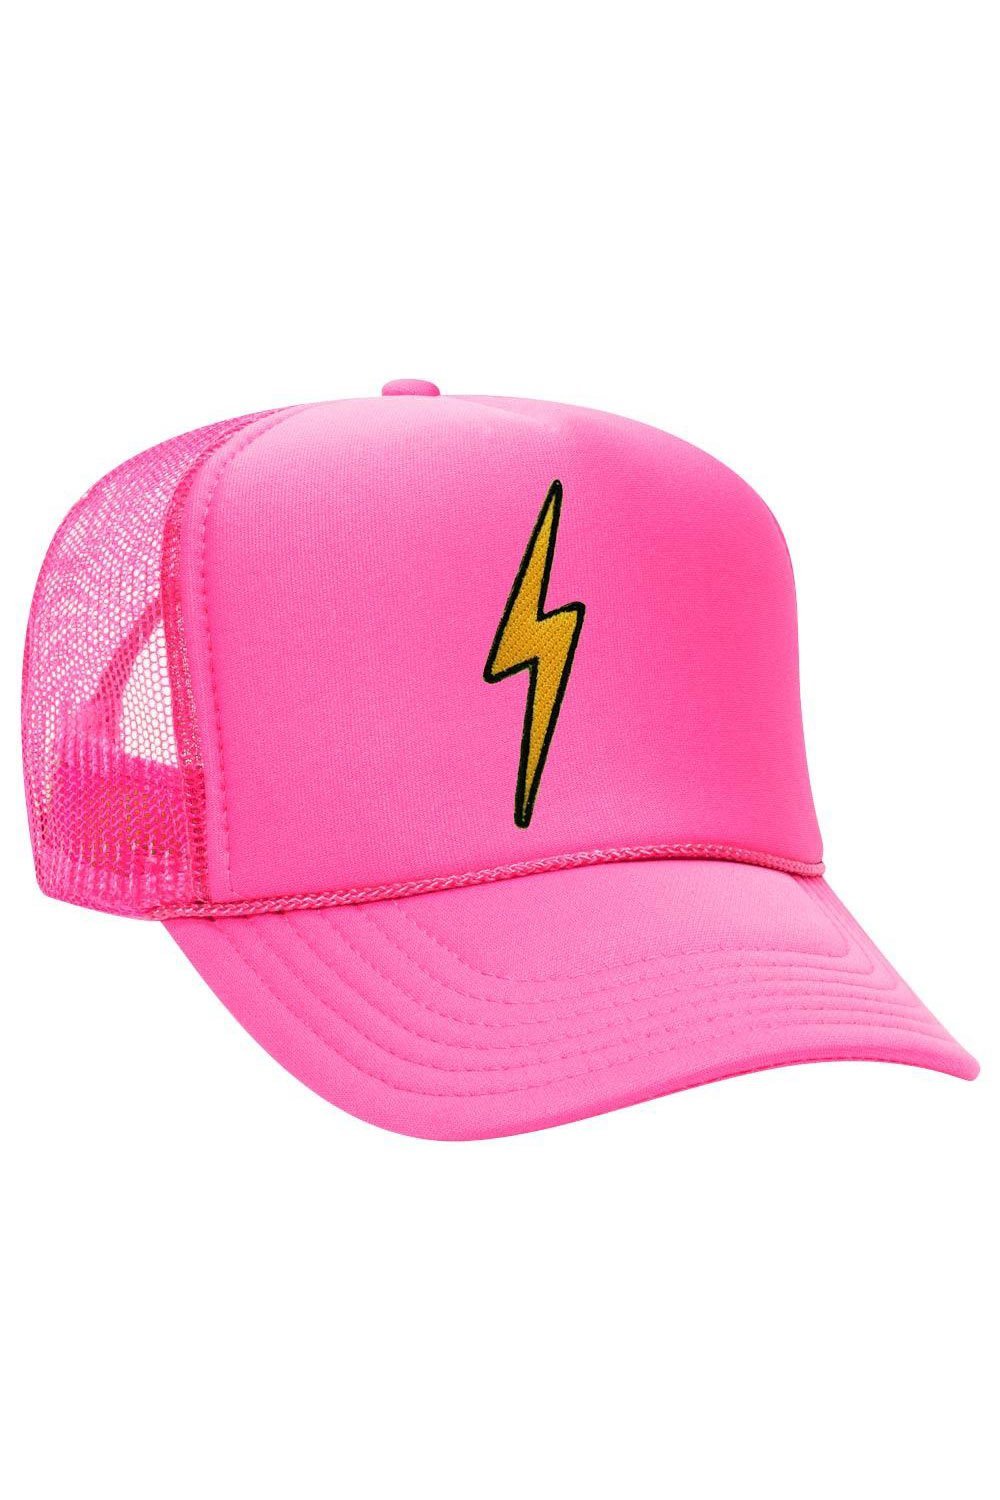 Bolt- Vintage Low Rise Trucker Hat, Neon Pink